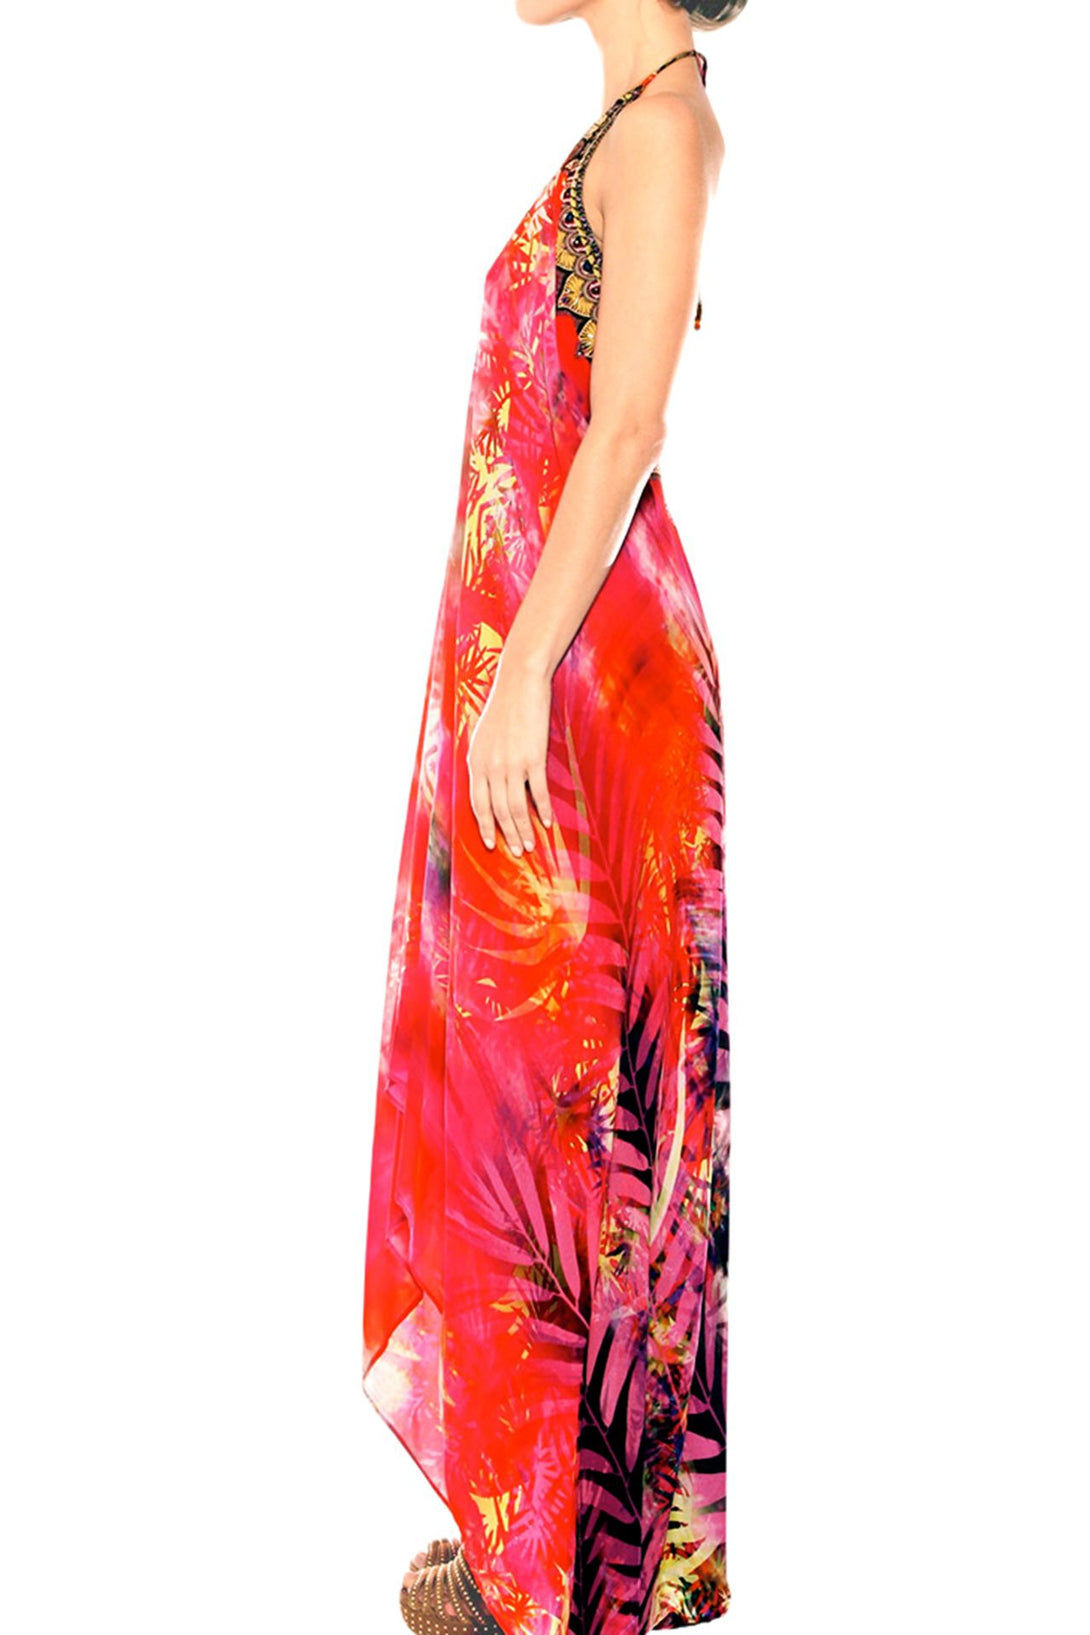  red cocktail dress, Shahida Parides, beach maxi dress, long summer dresses, backless maxi dress,